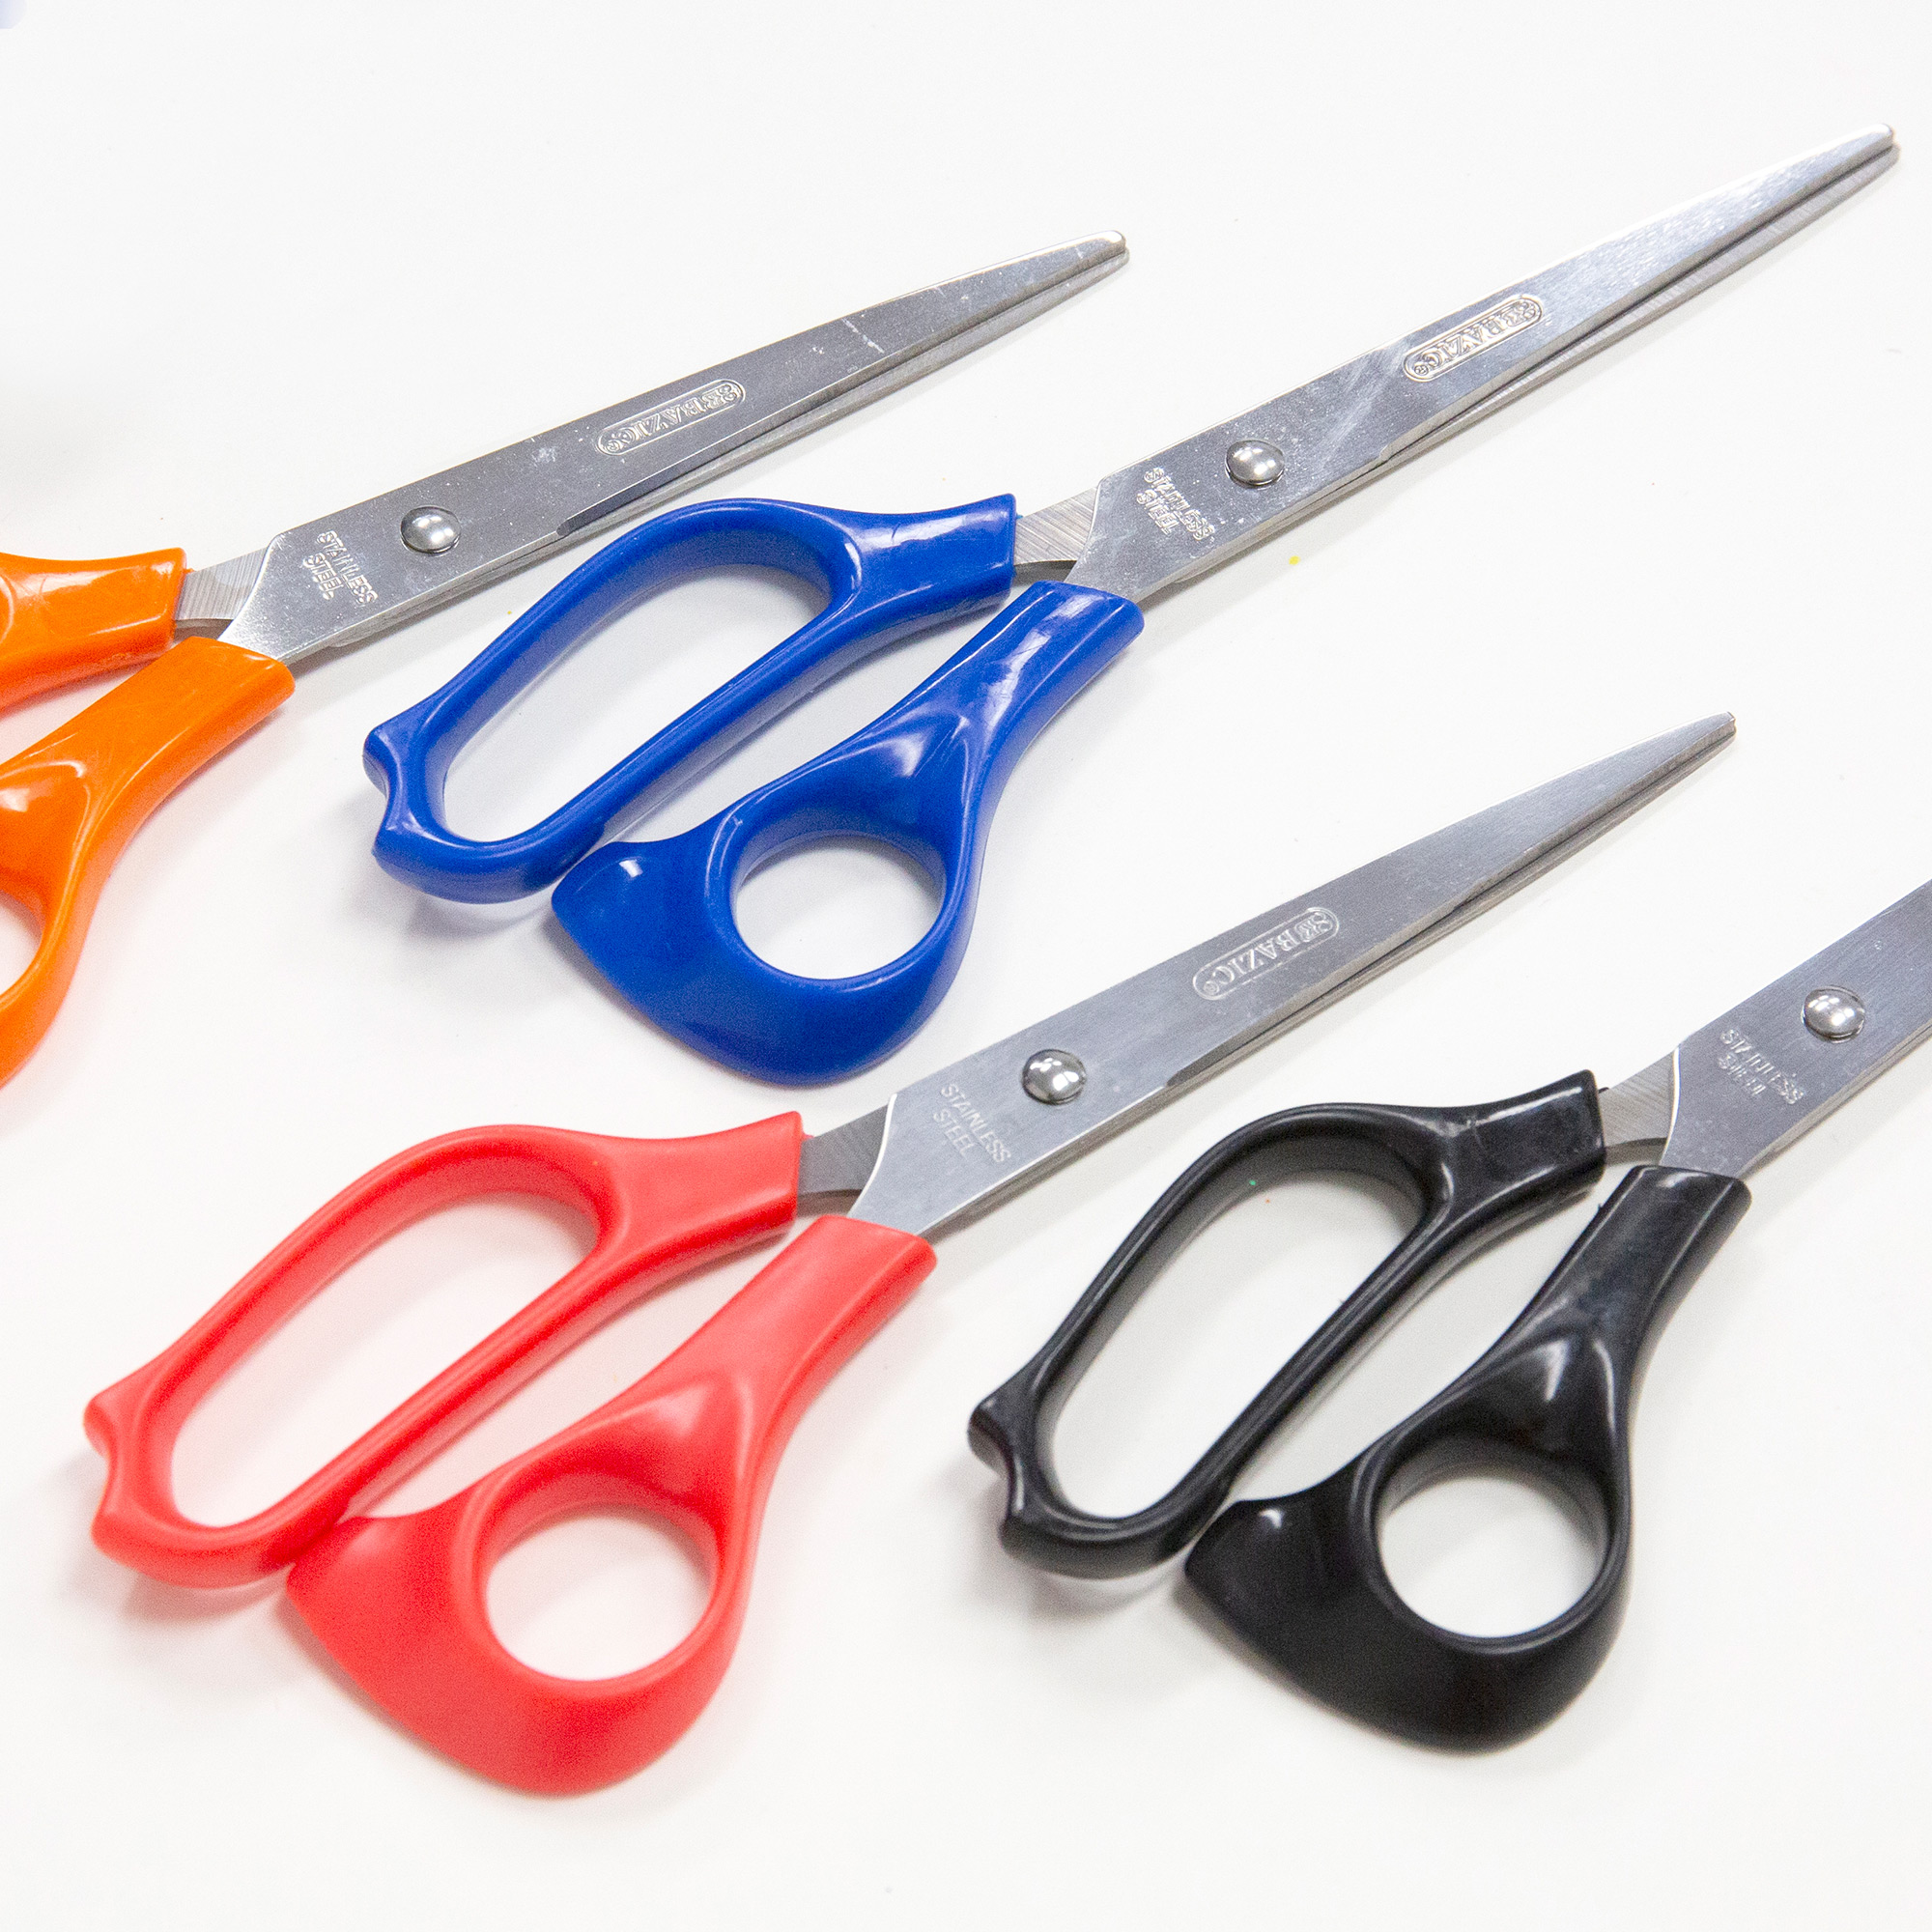 8 Pastel Classic Stainless Steel Scissors